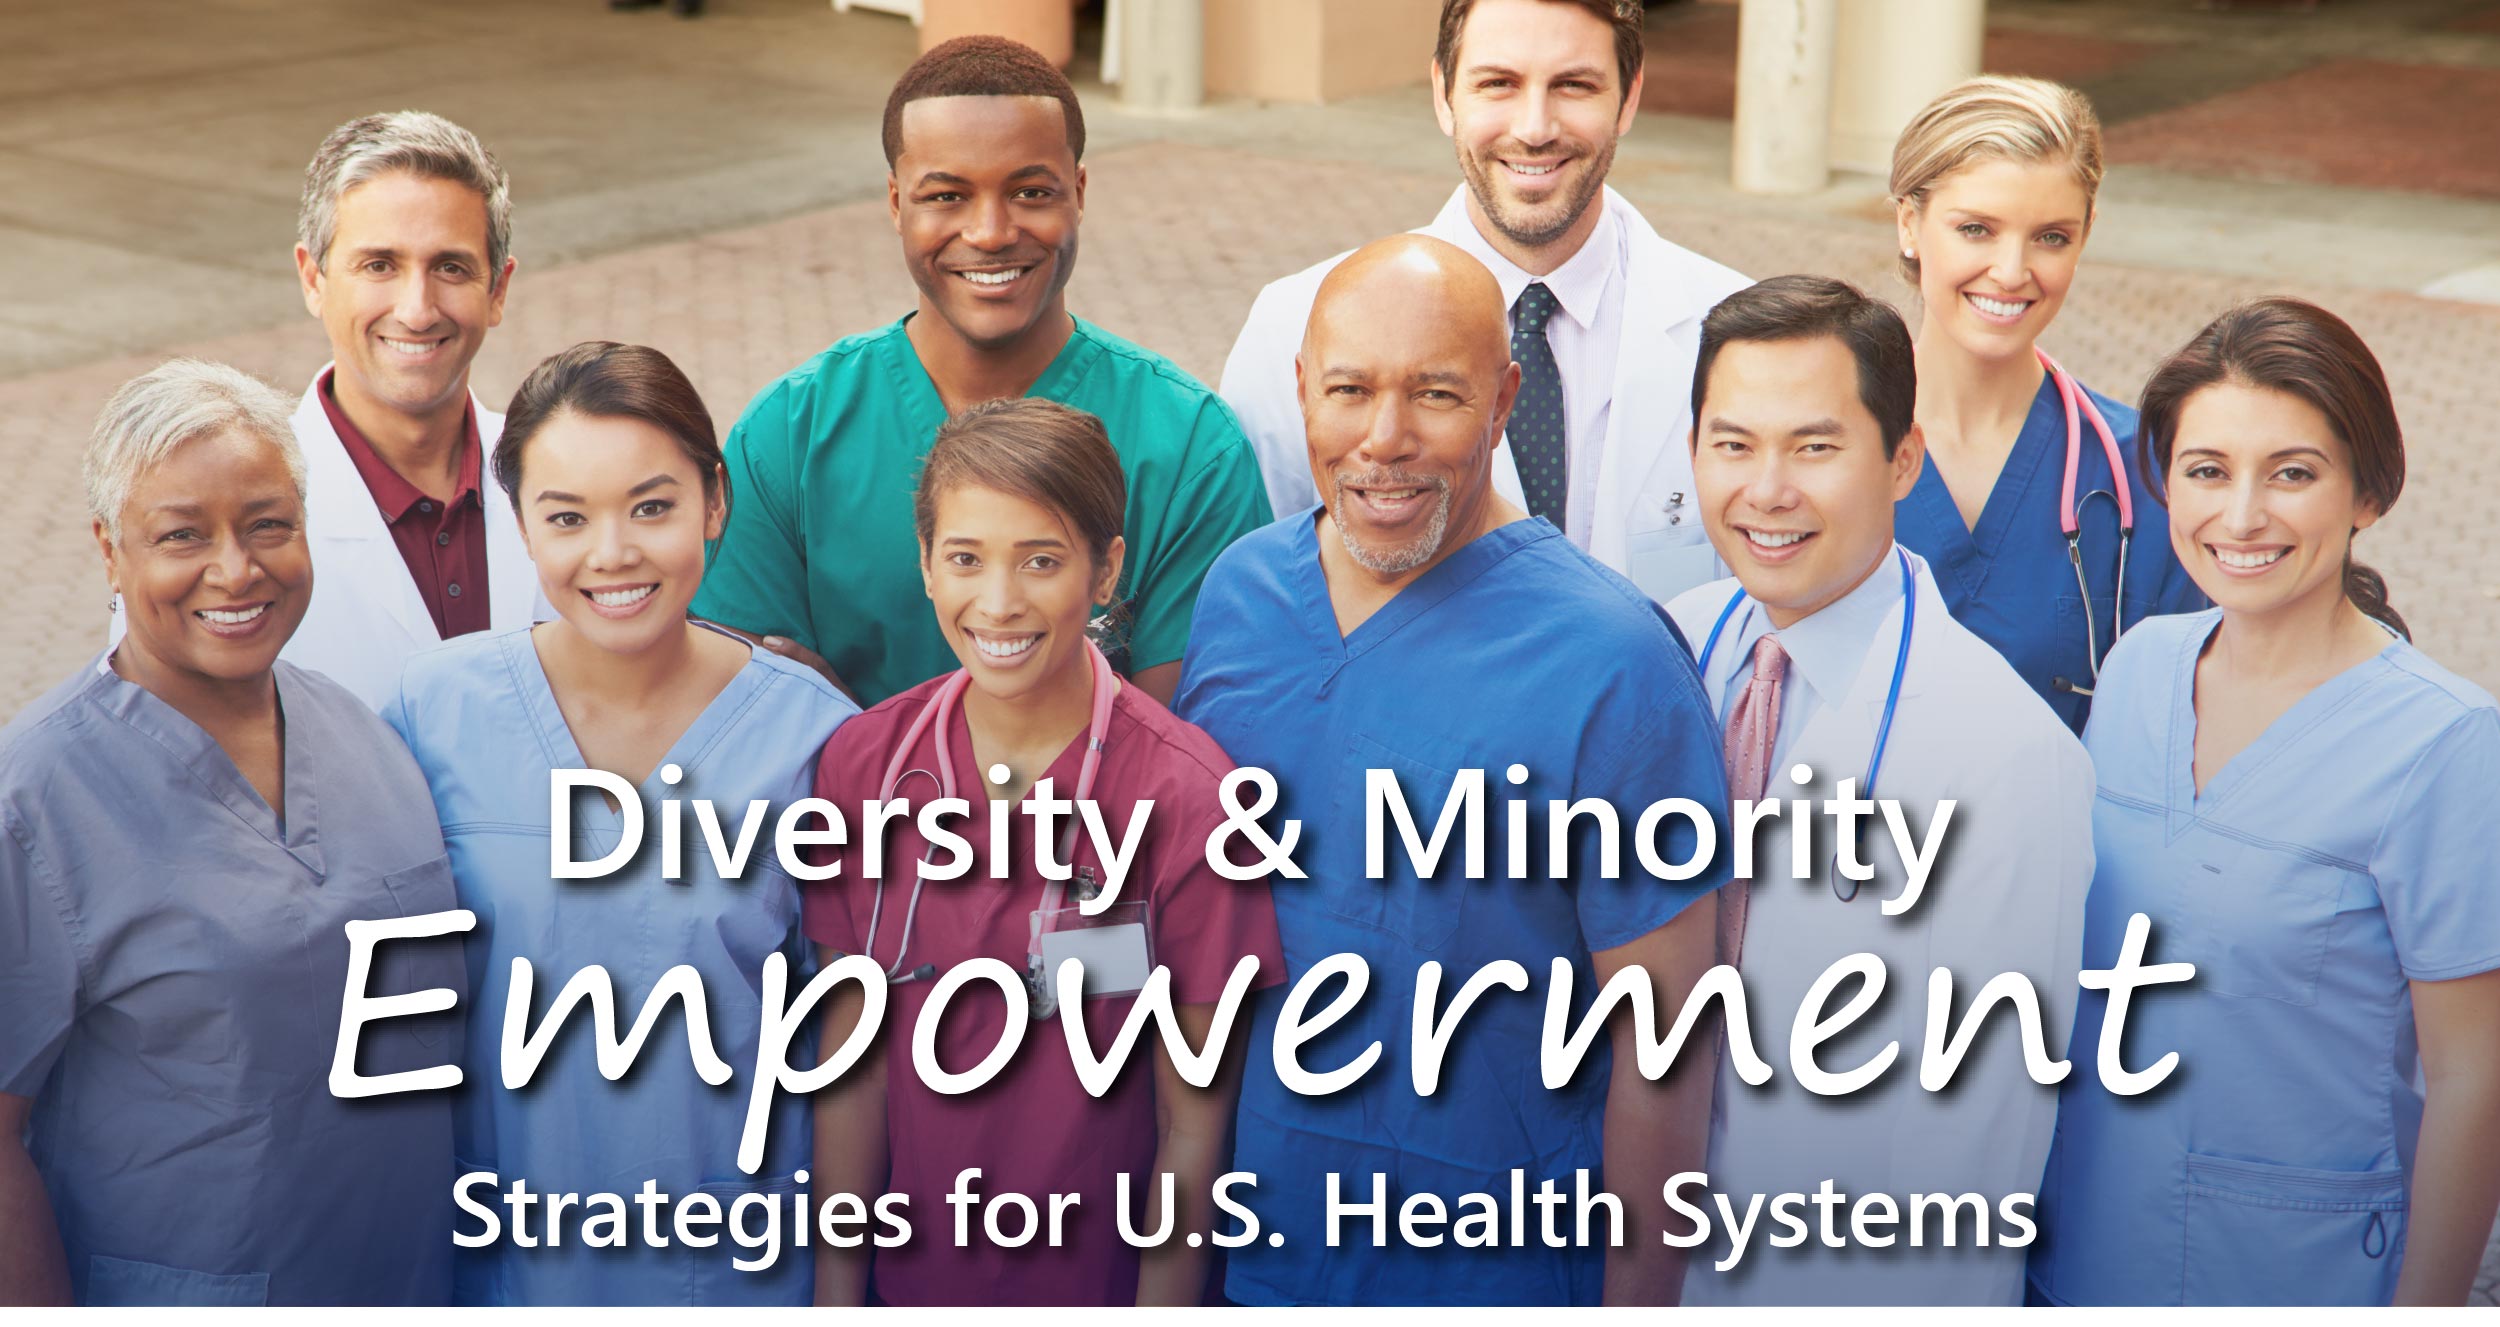 Diversity & Minority Empowerment Strategies for U.S. Health Systems